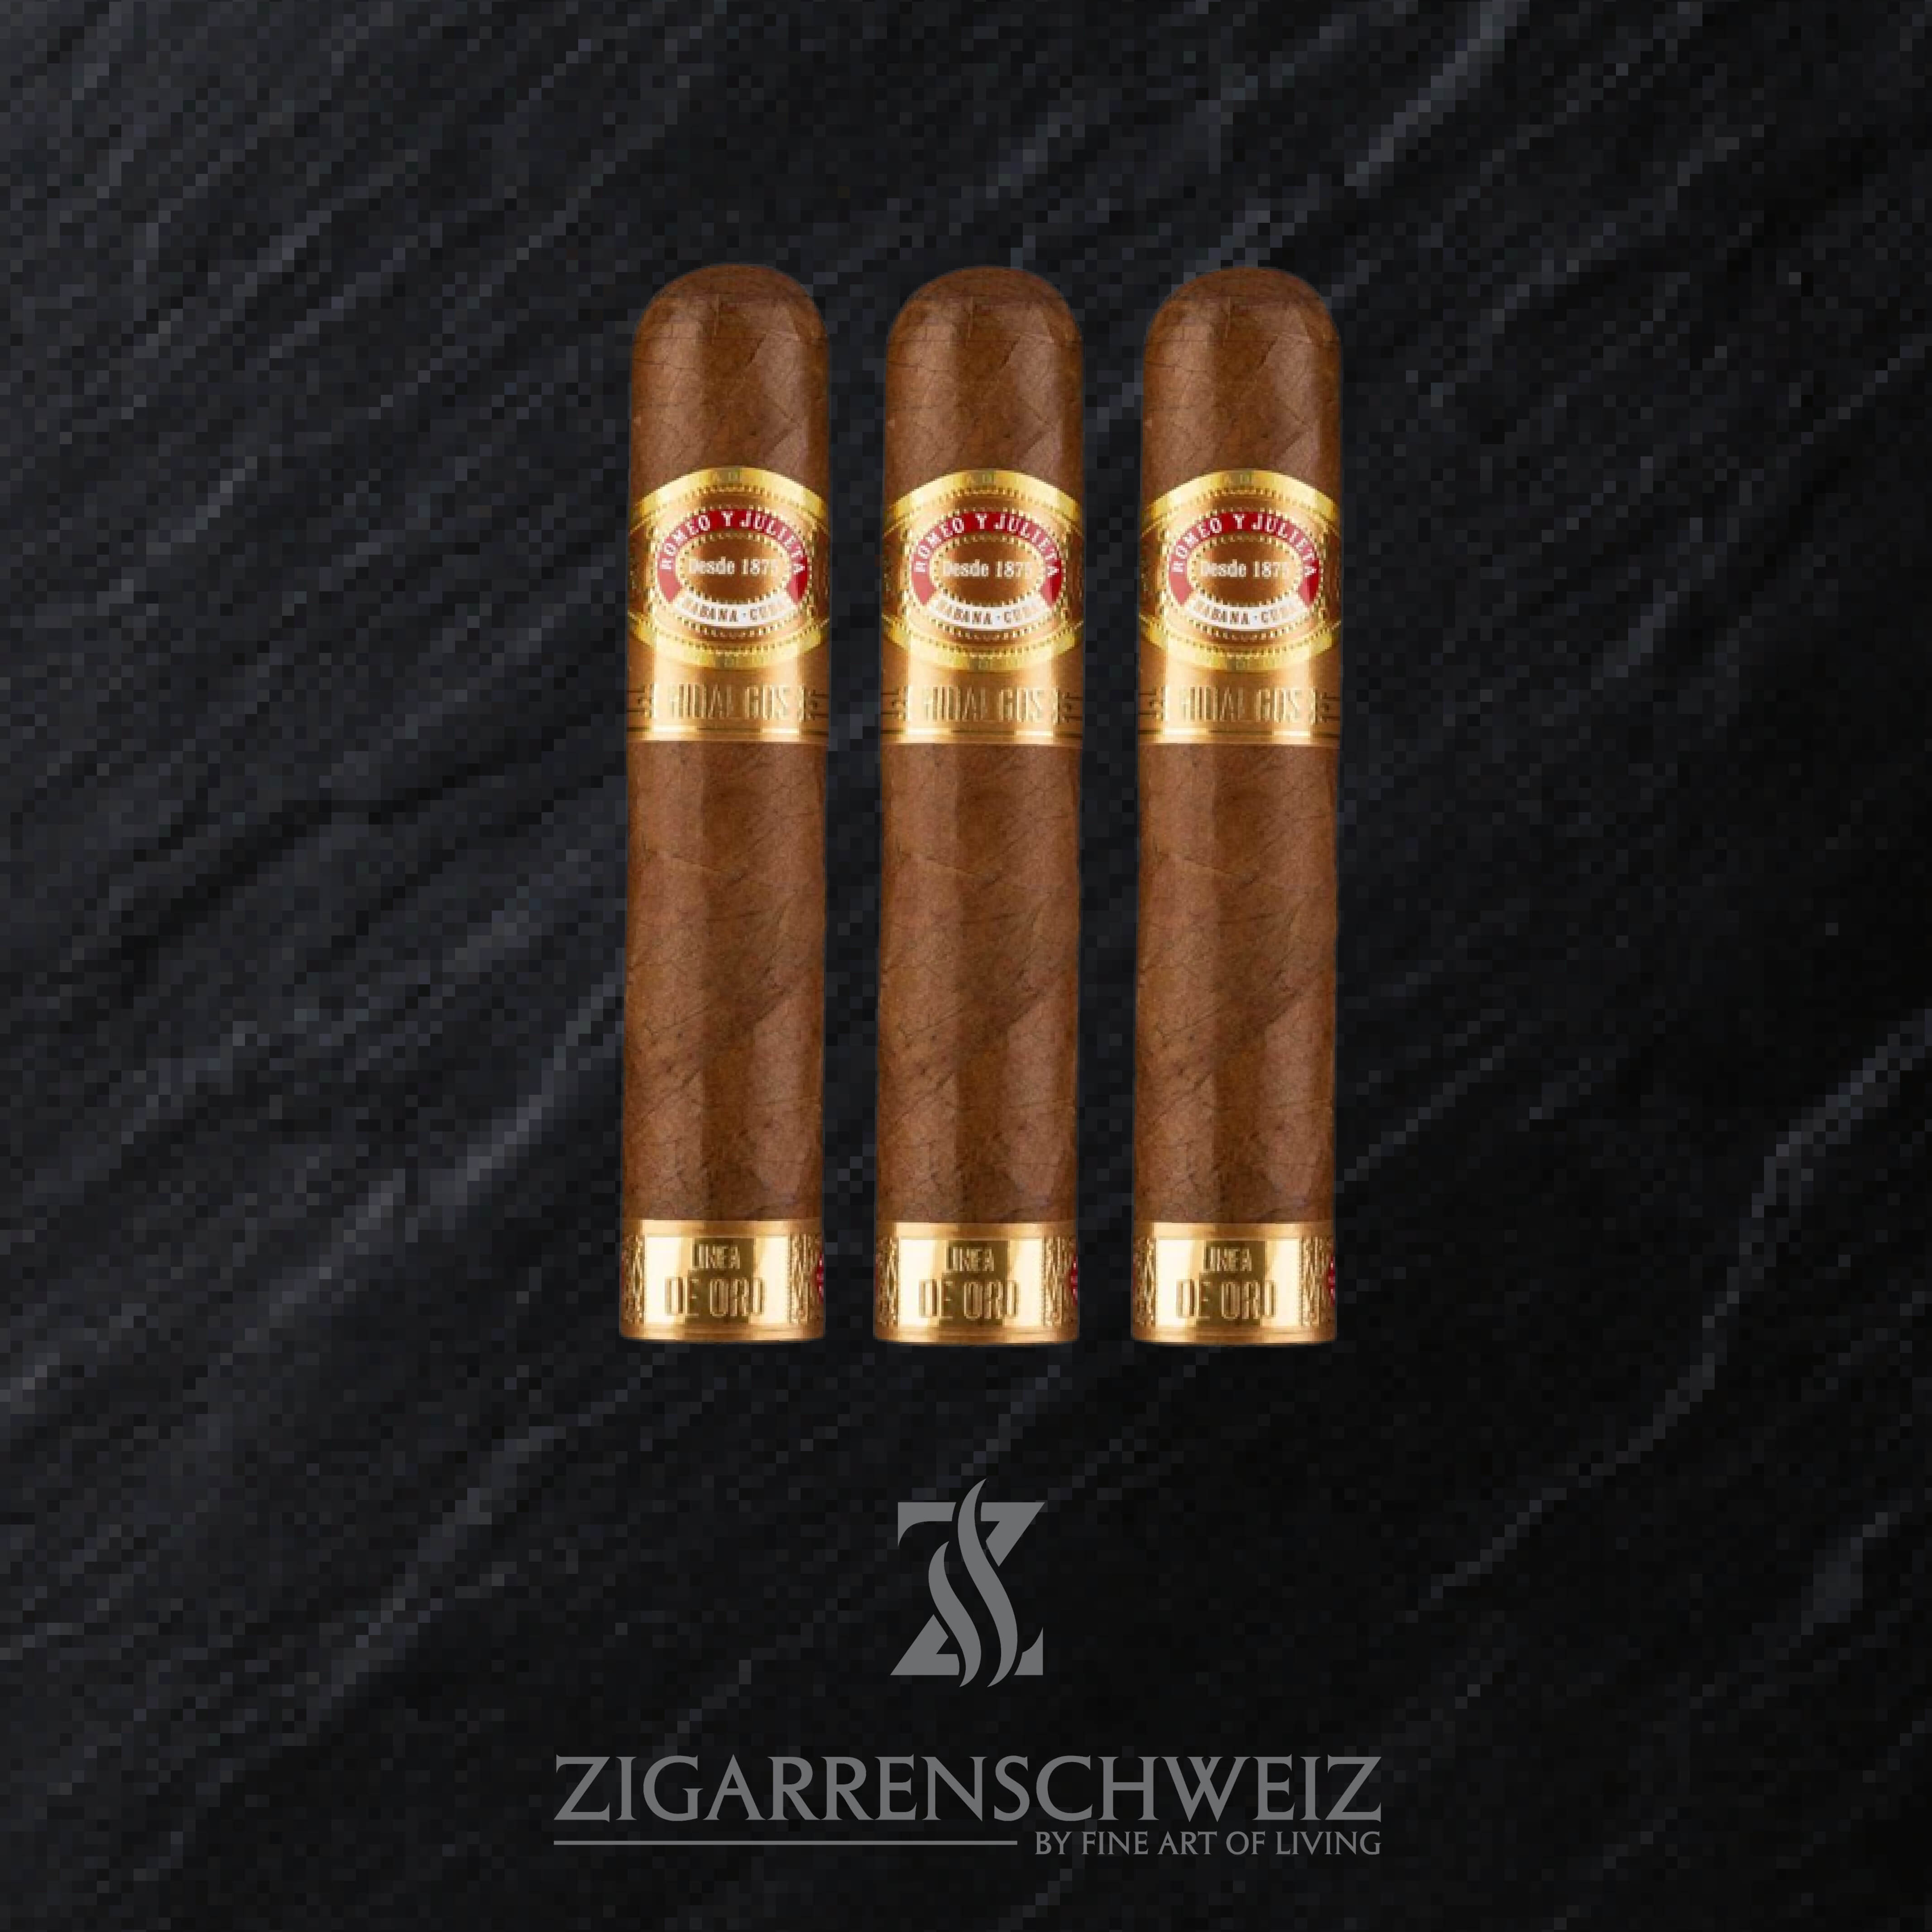 Romeo y Julieta Linea de Oro Hidalgo 3er Zigarren Etui von Zigarren Schweiz